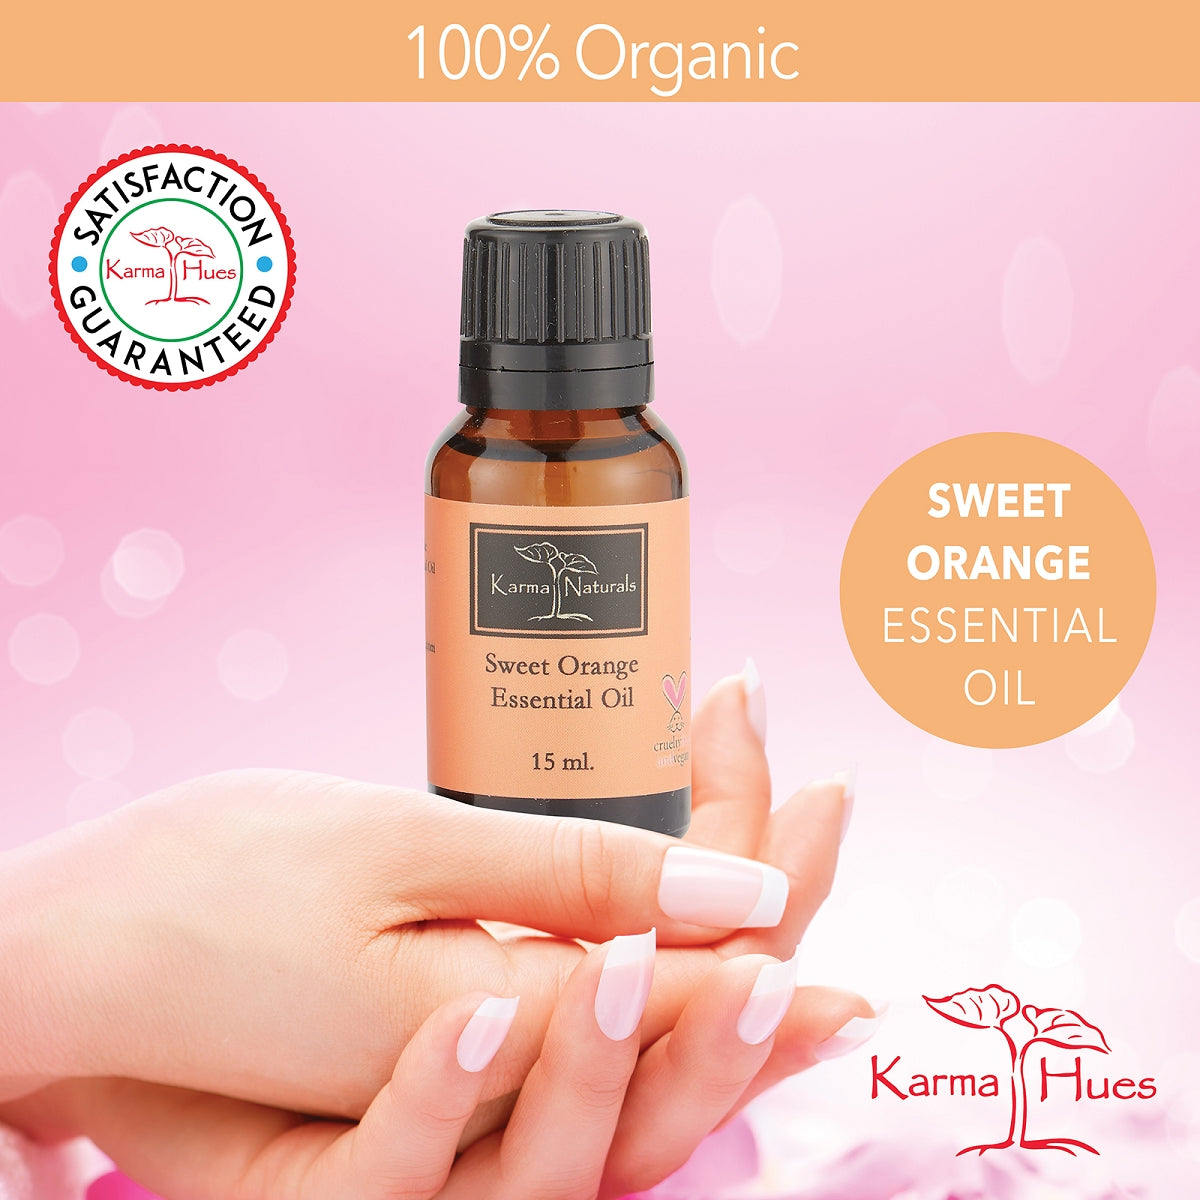 Karma Naturals Sweet Orange Essential Oil